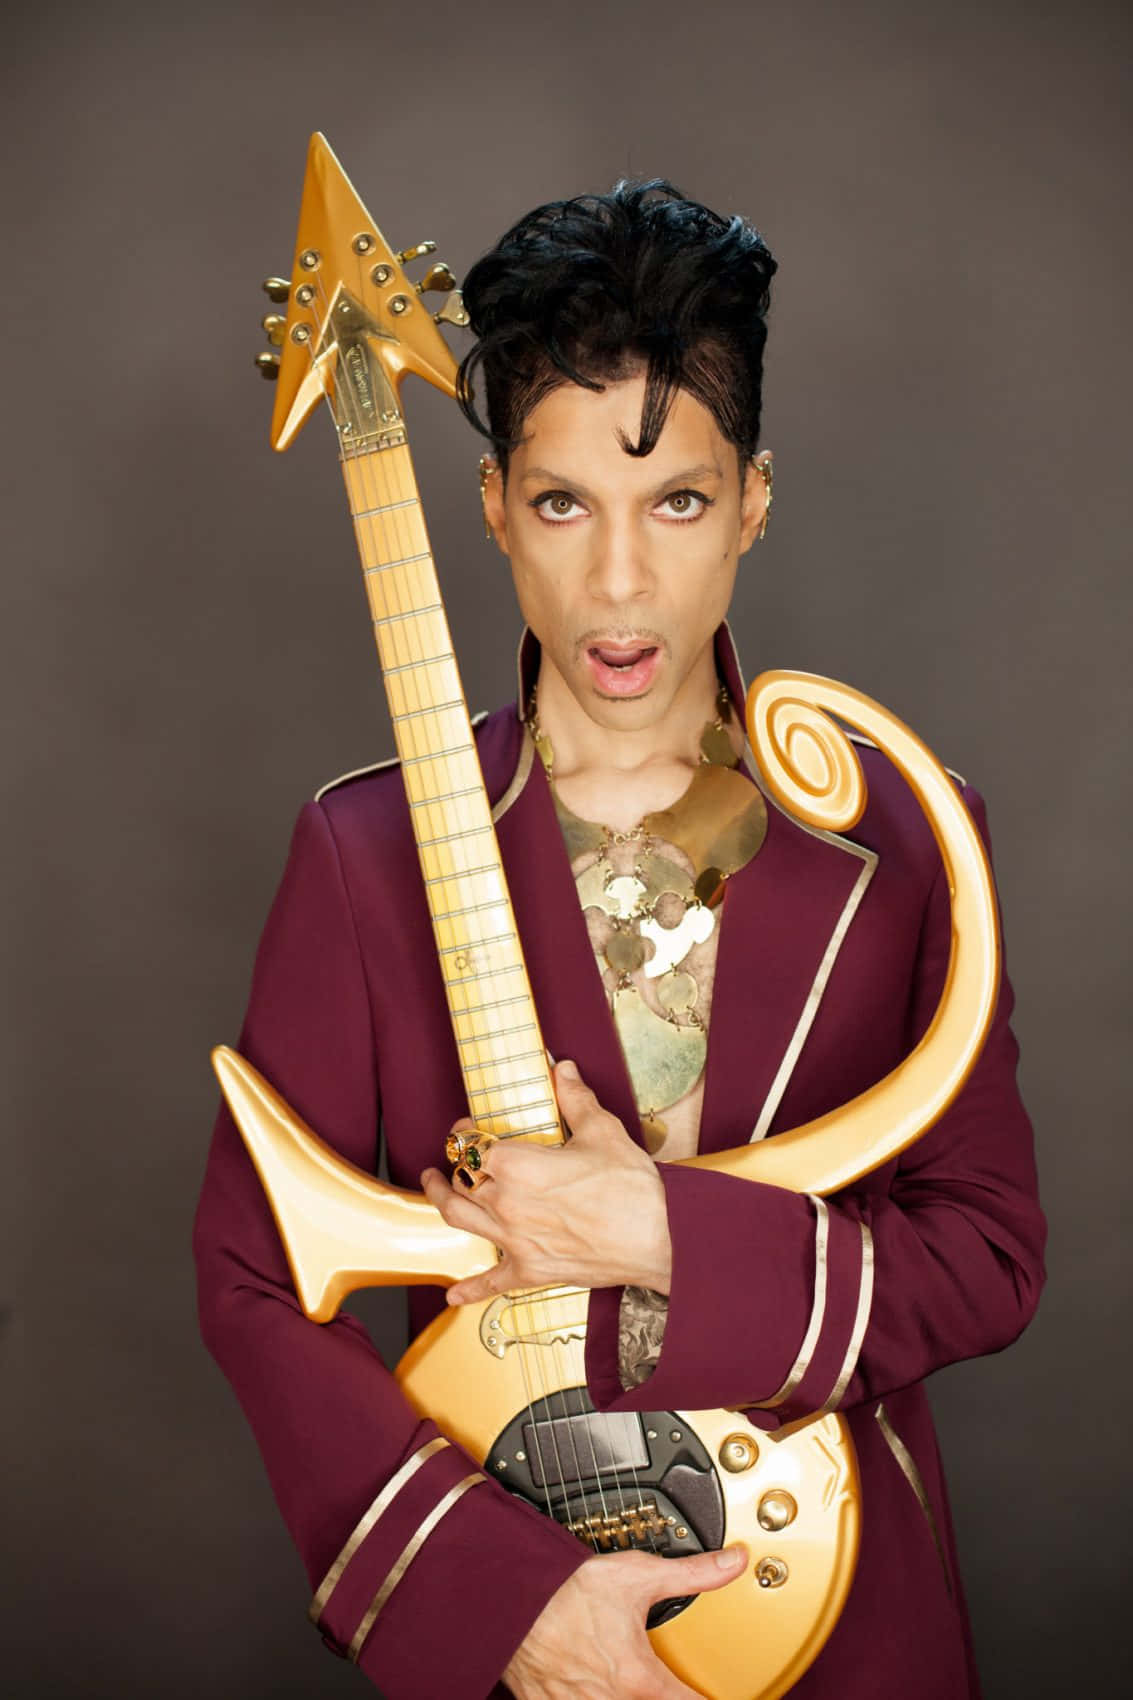 Derlegendäre Künstler: Prince